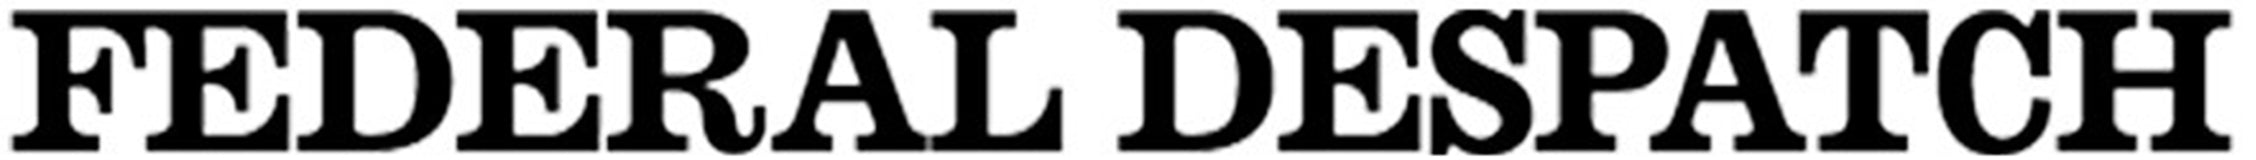 Sylvi Watch Brand Featured in Federal Despatch - Logo